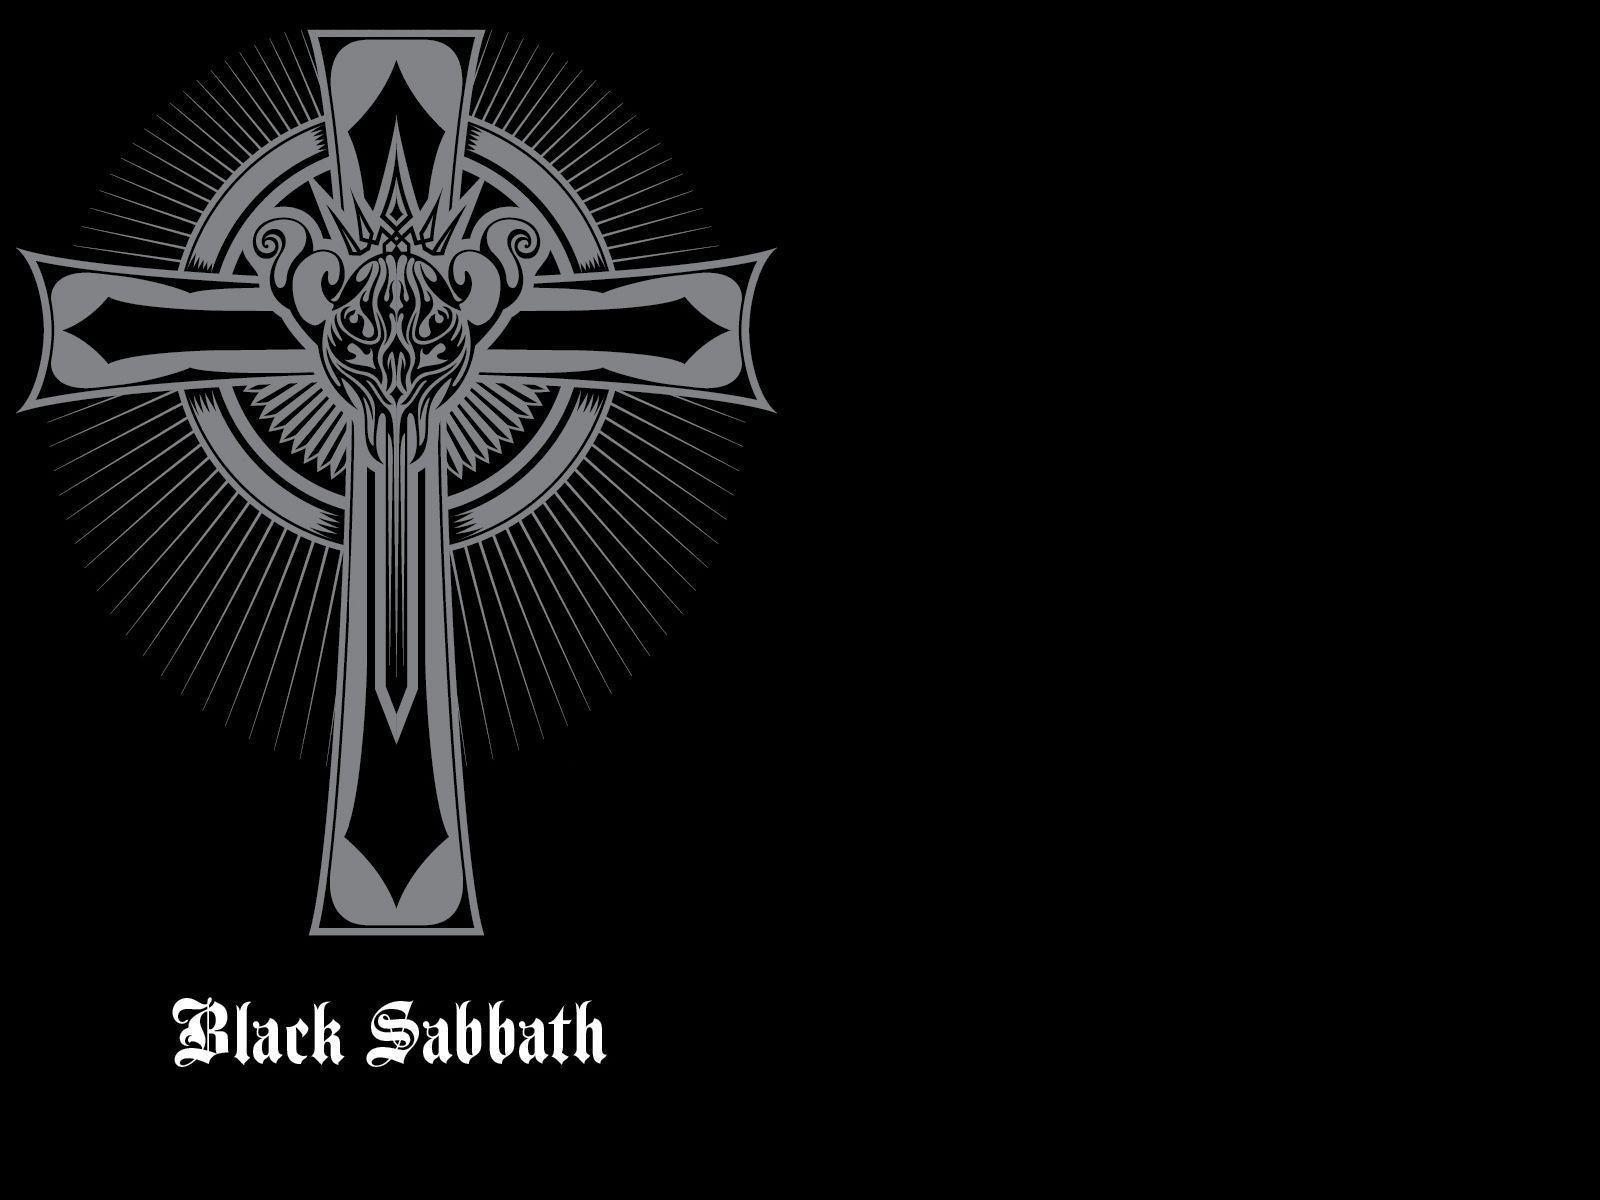 Black Sabbath image Black Sabbath HD wallpaper and background